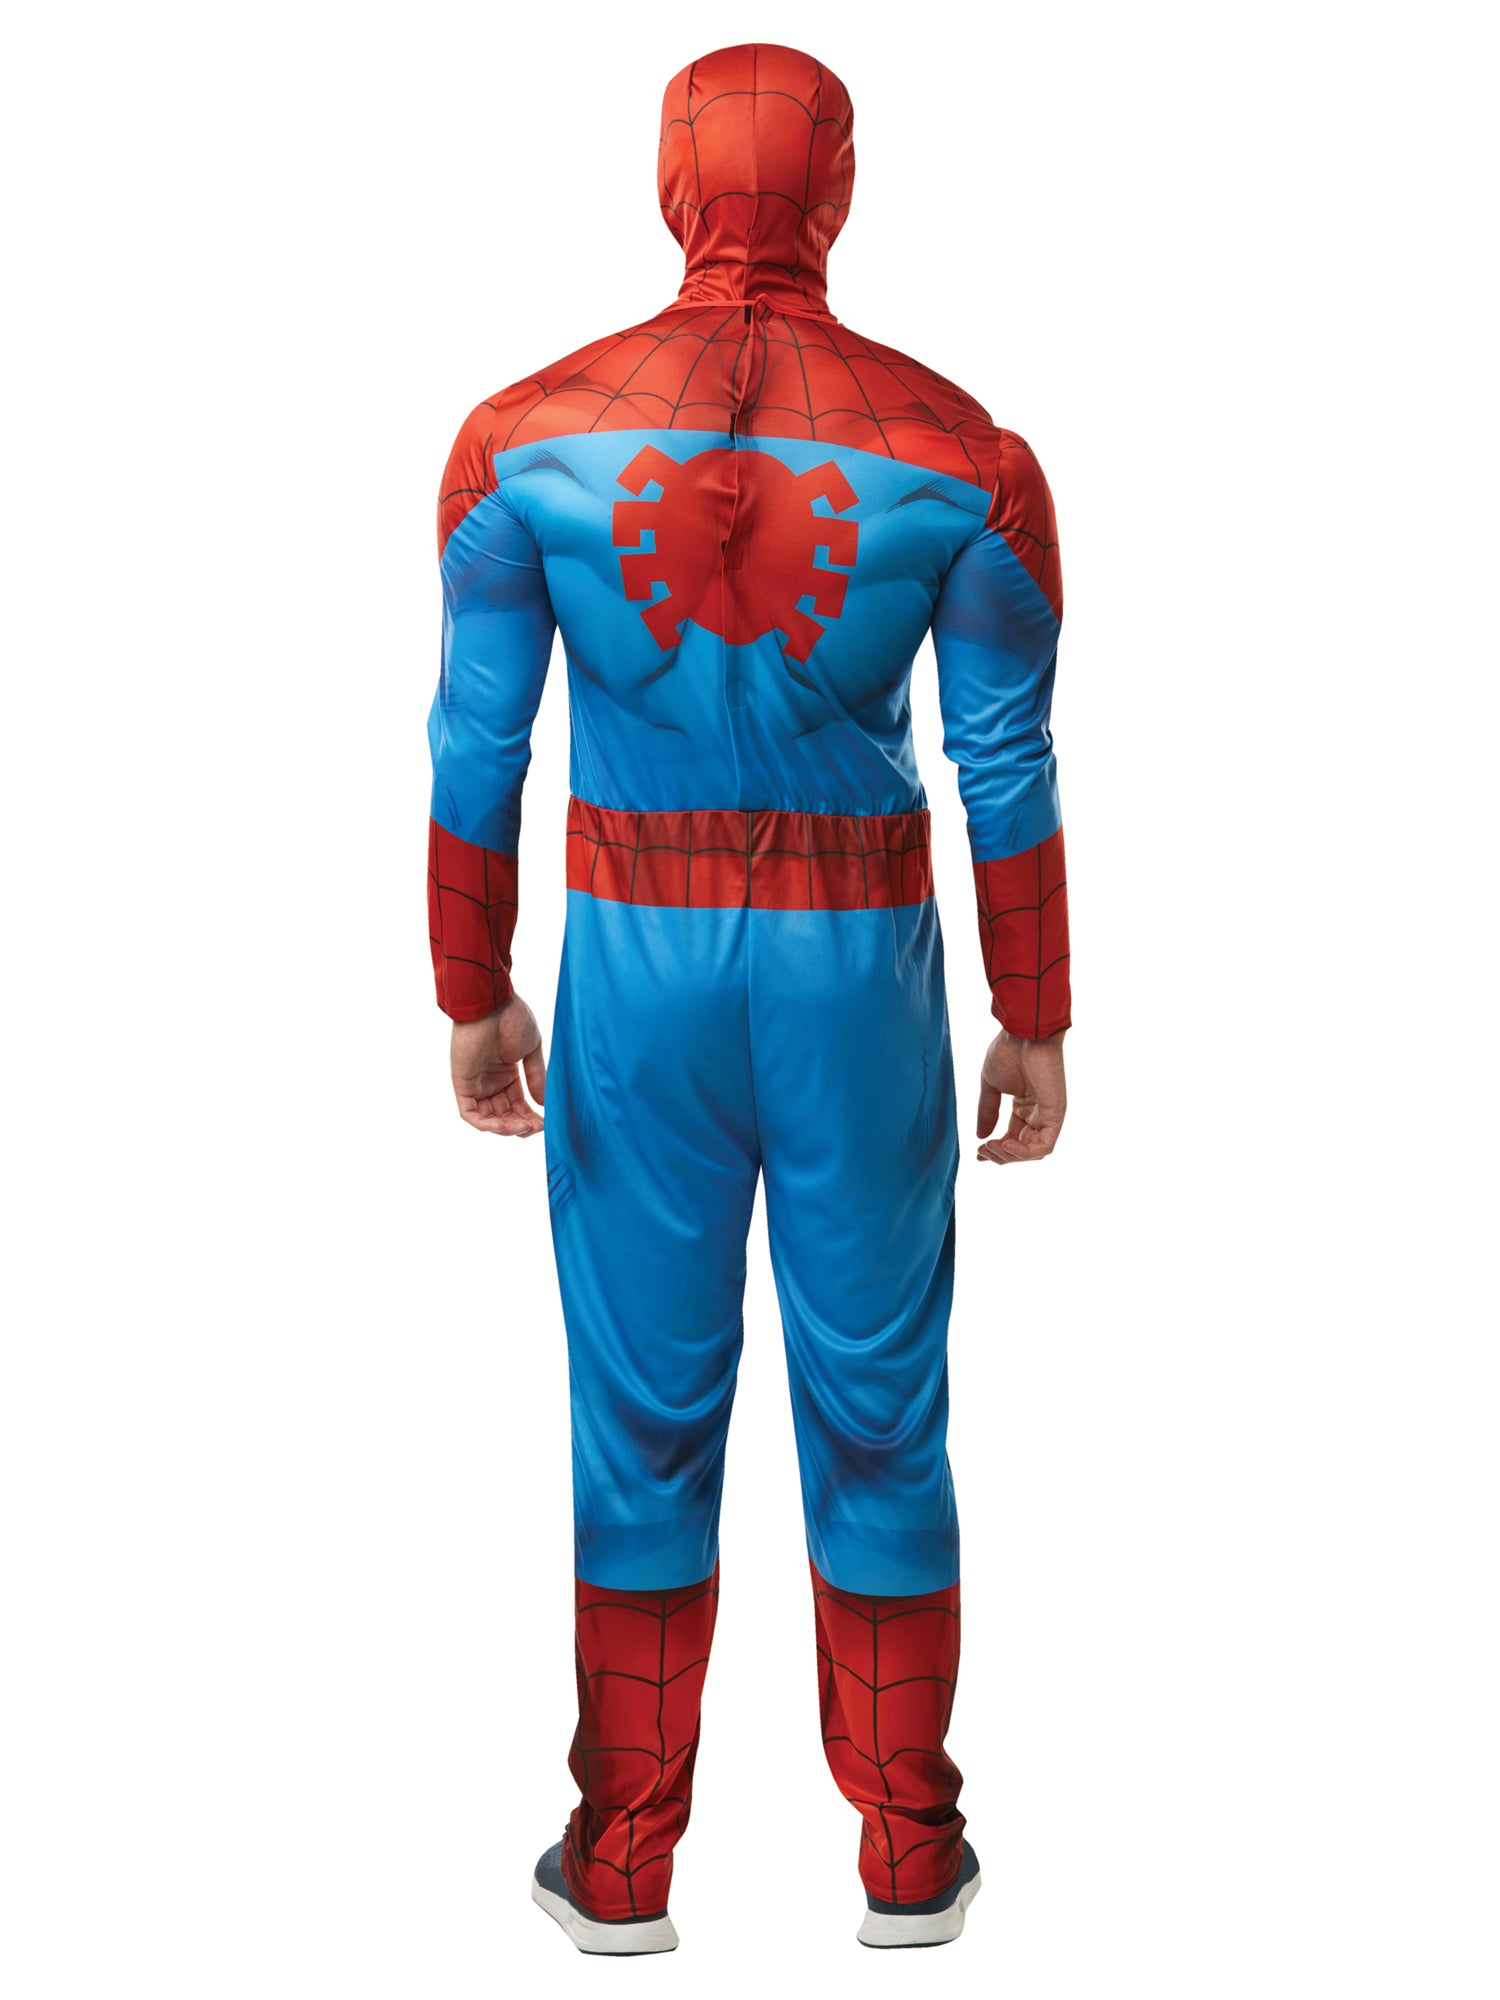 Spider-Man, Avengers, Multi, Marvel, Adult Costume, Extra Large, Back